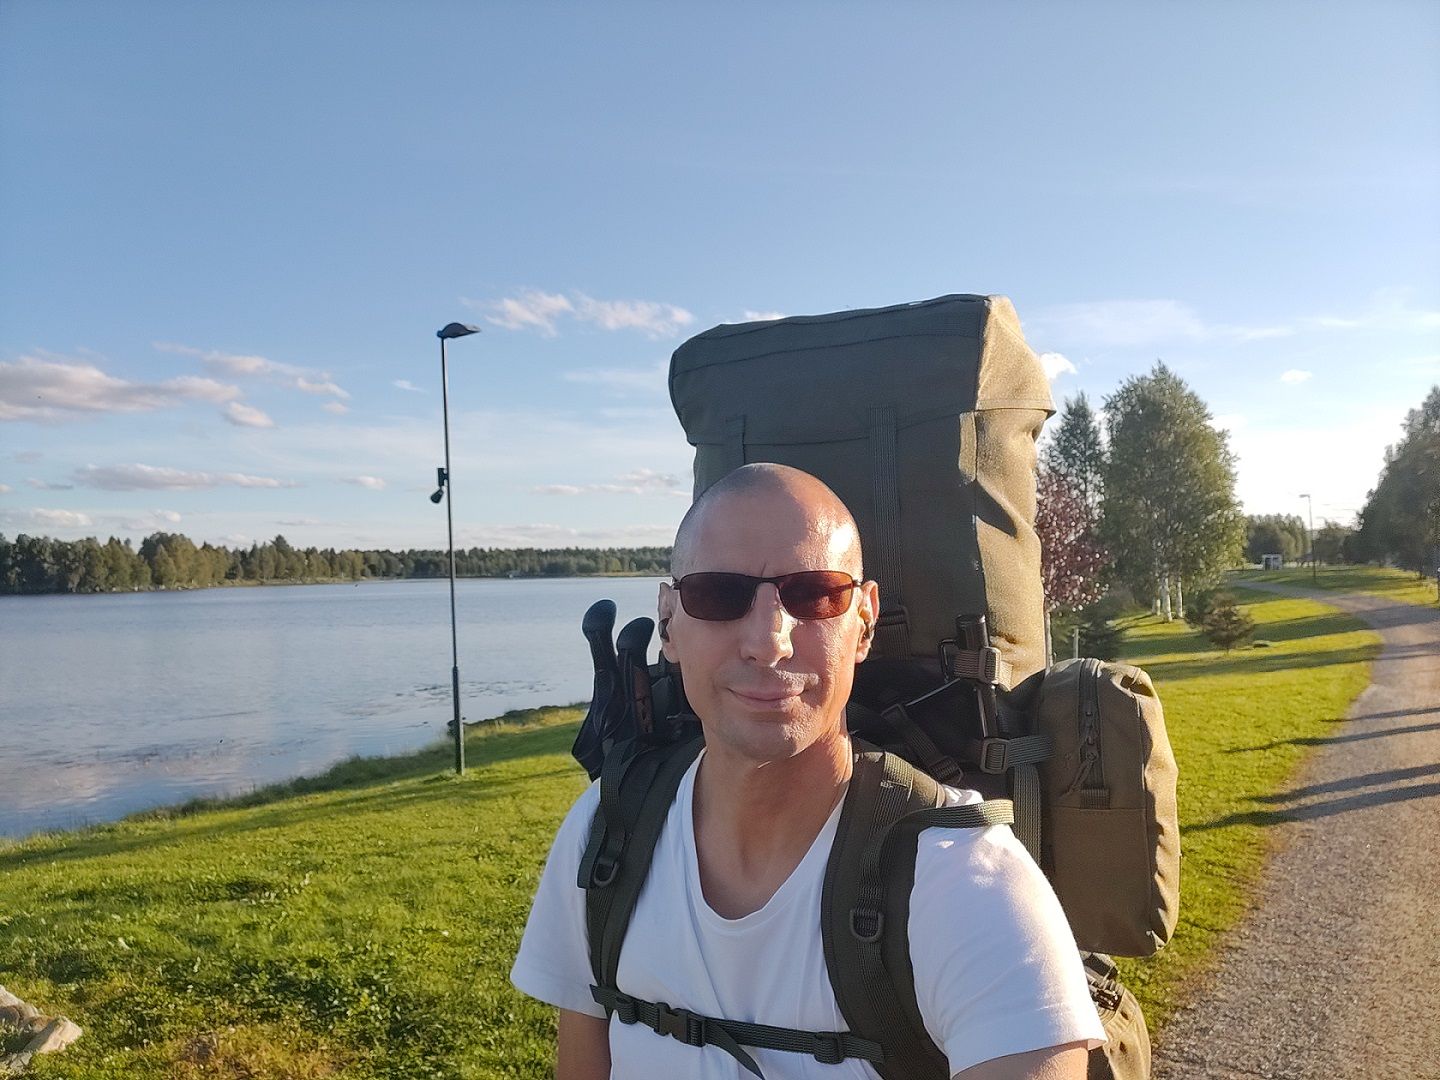 Niko standing near Kirkkolahti, with a full hiking backpack, waiting for the bus.